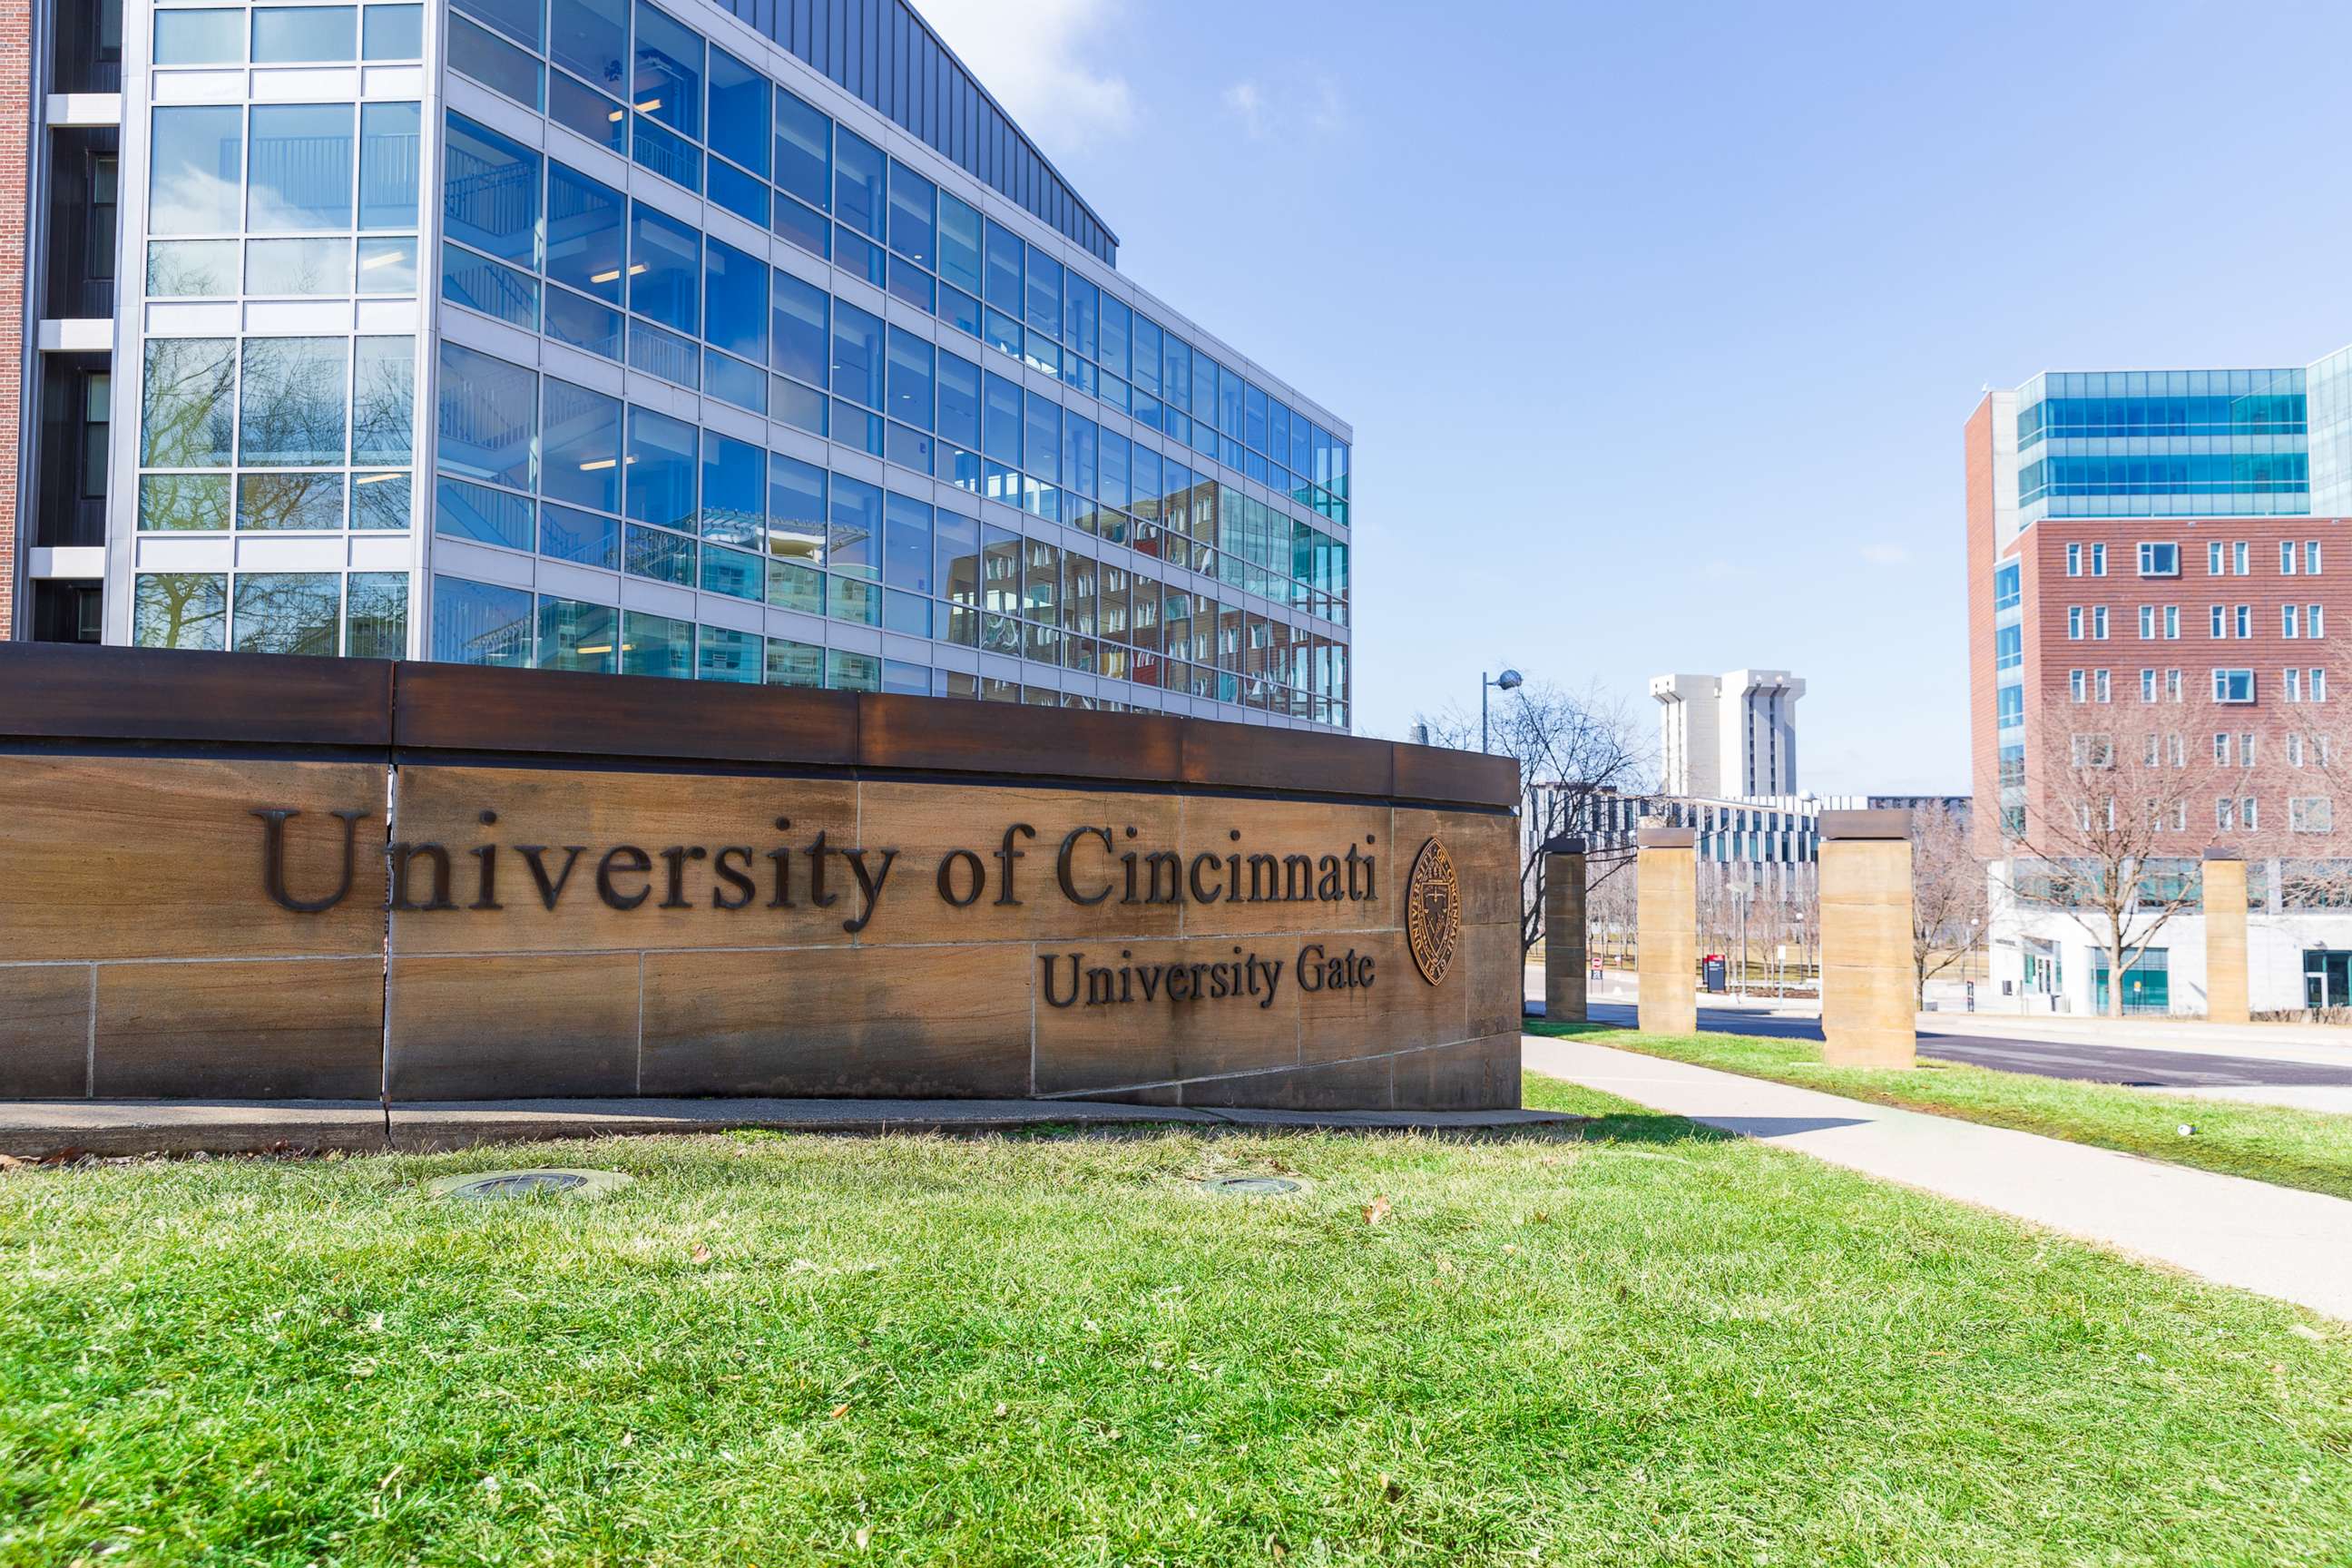 PHOTO: University of Cincinnati entrance sign is seen in this stock photo in Cincinnati, on Feb. 27, 2021.